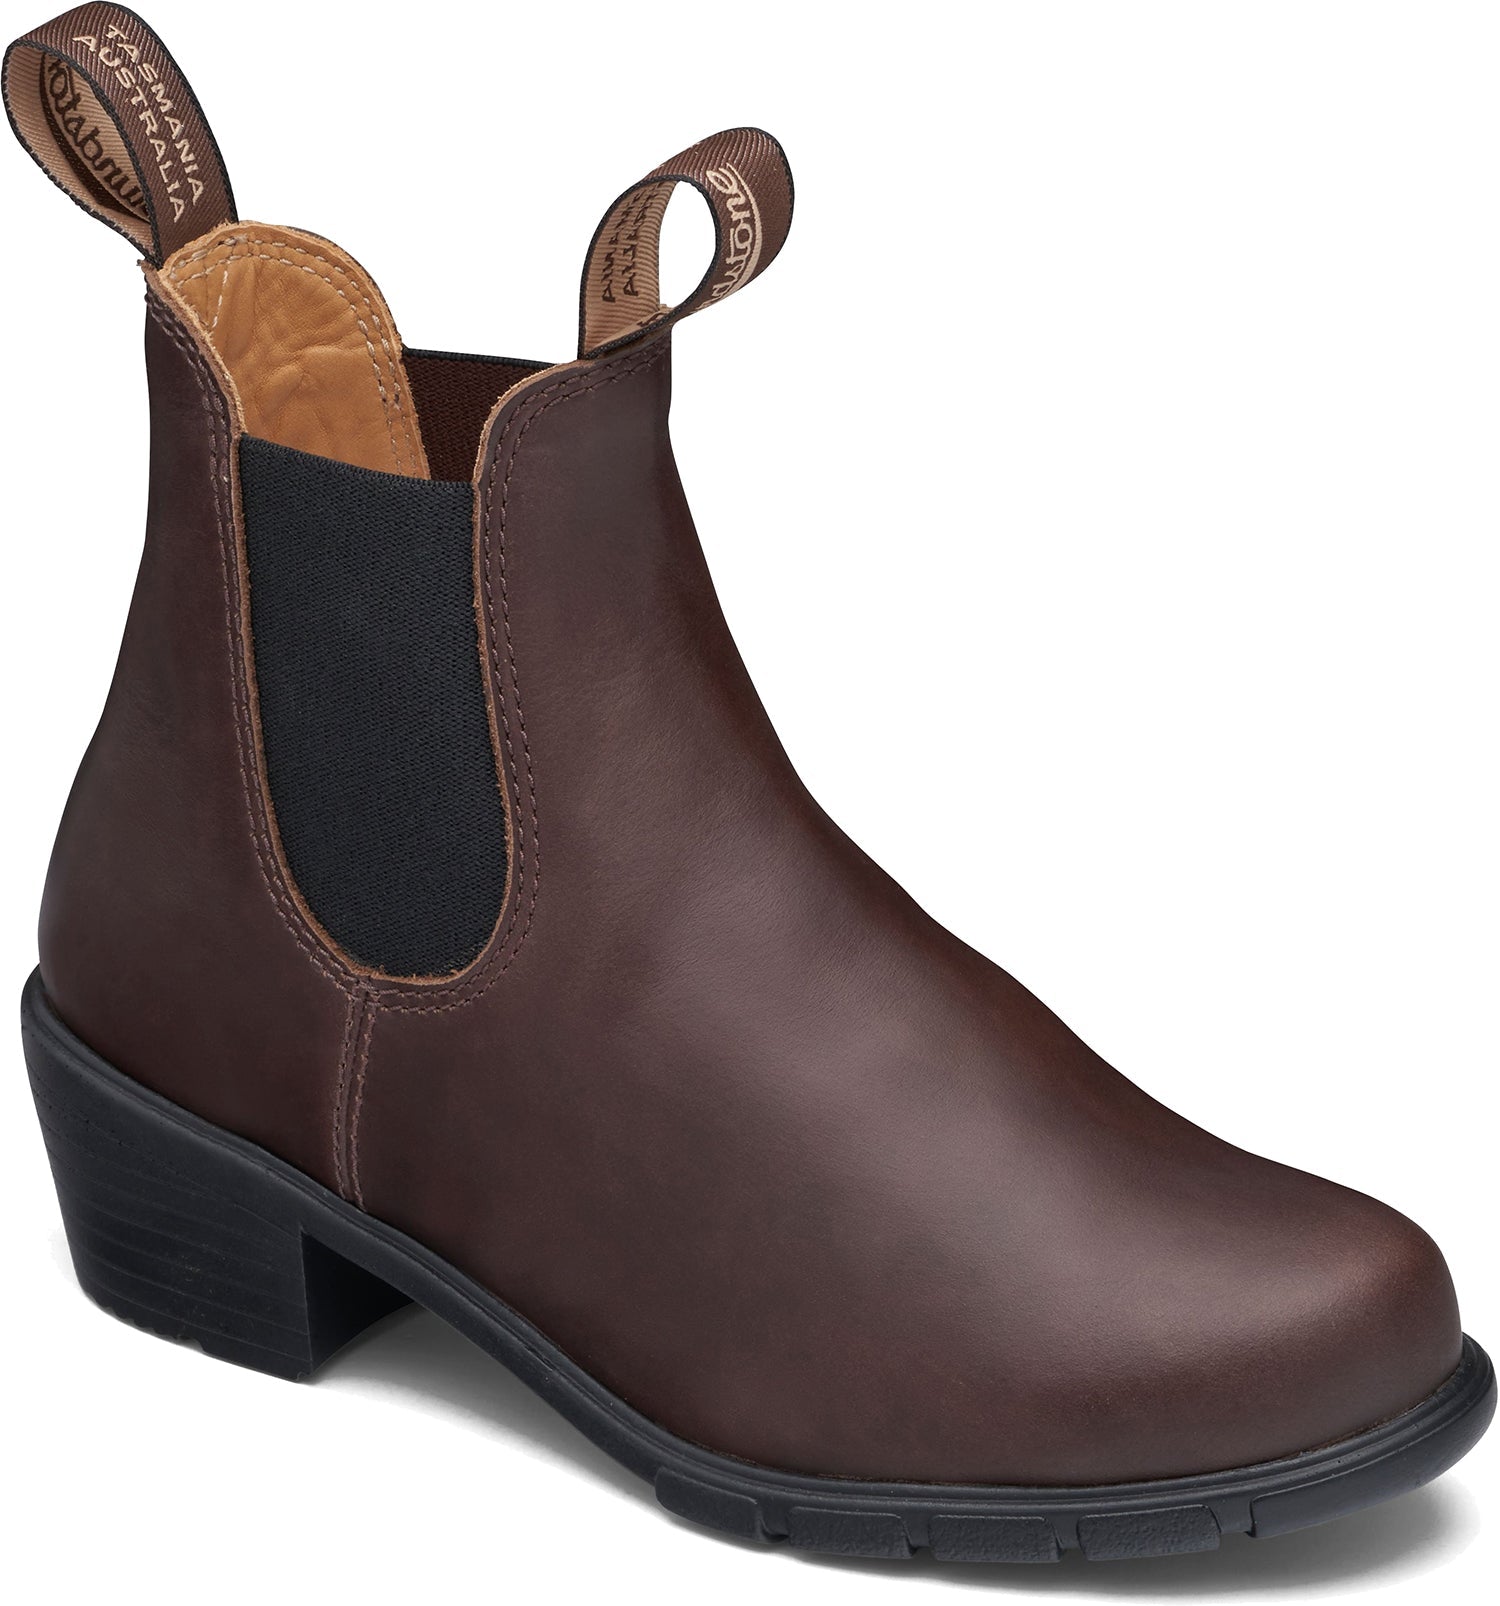 Blundstone 2168 Women's Series Heel Cocoa Brown - Grady’s Feet Essentials - Blundstone